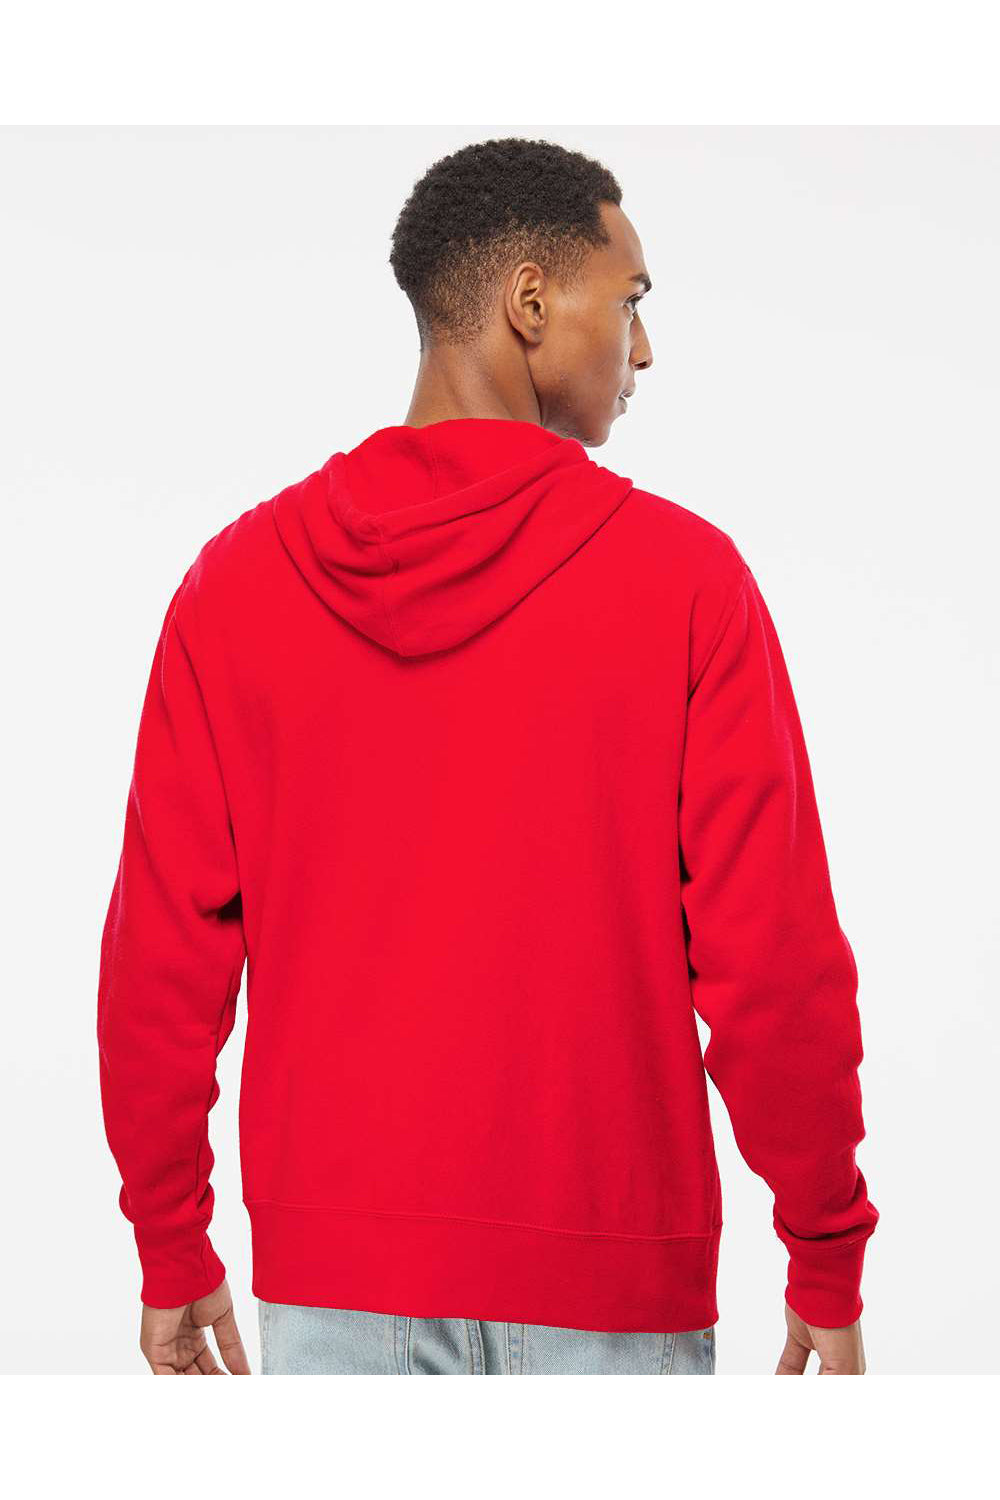 Independent Trading Co. AFX90UNZ Mens Full Zip Hooded Sweatshirt Hoodie Red Model Back